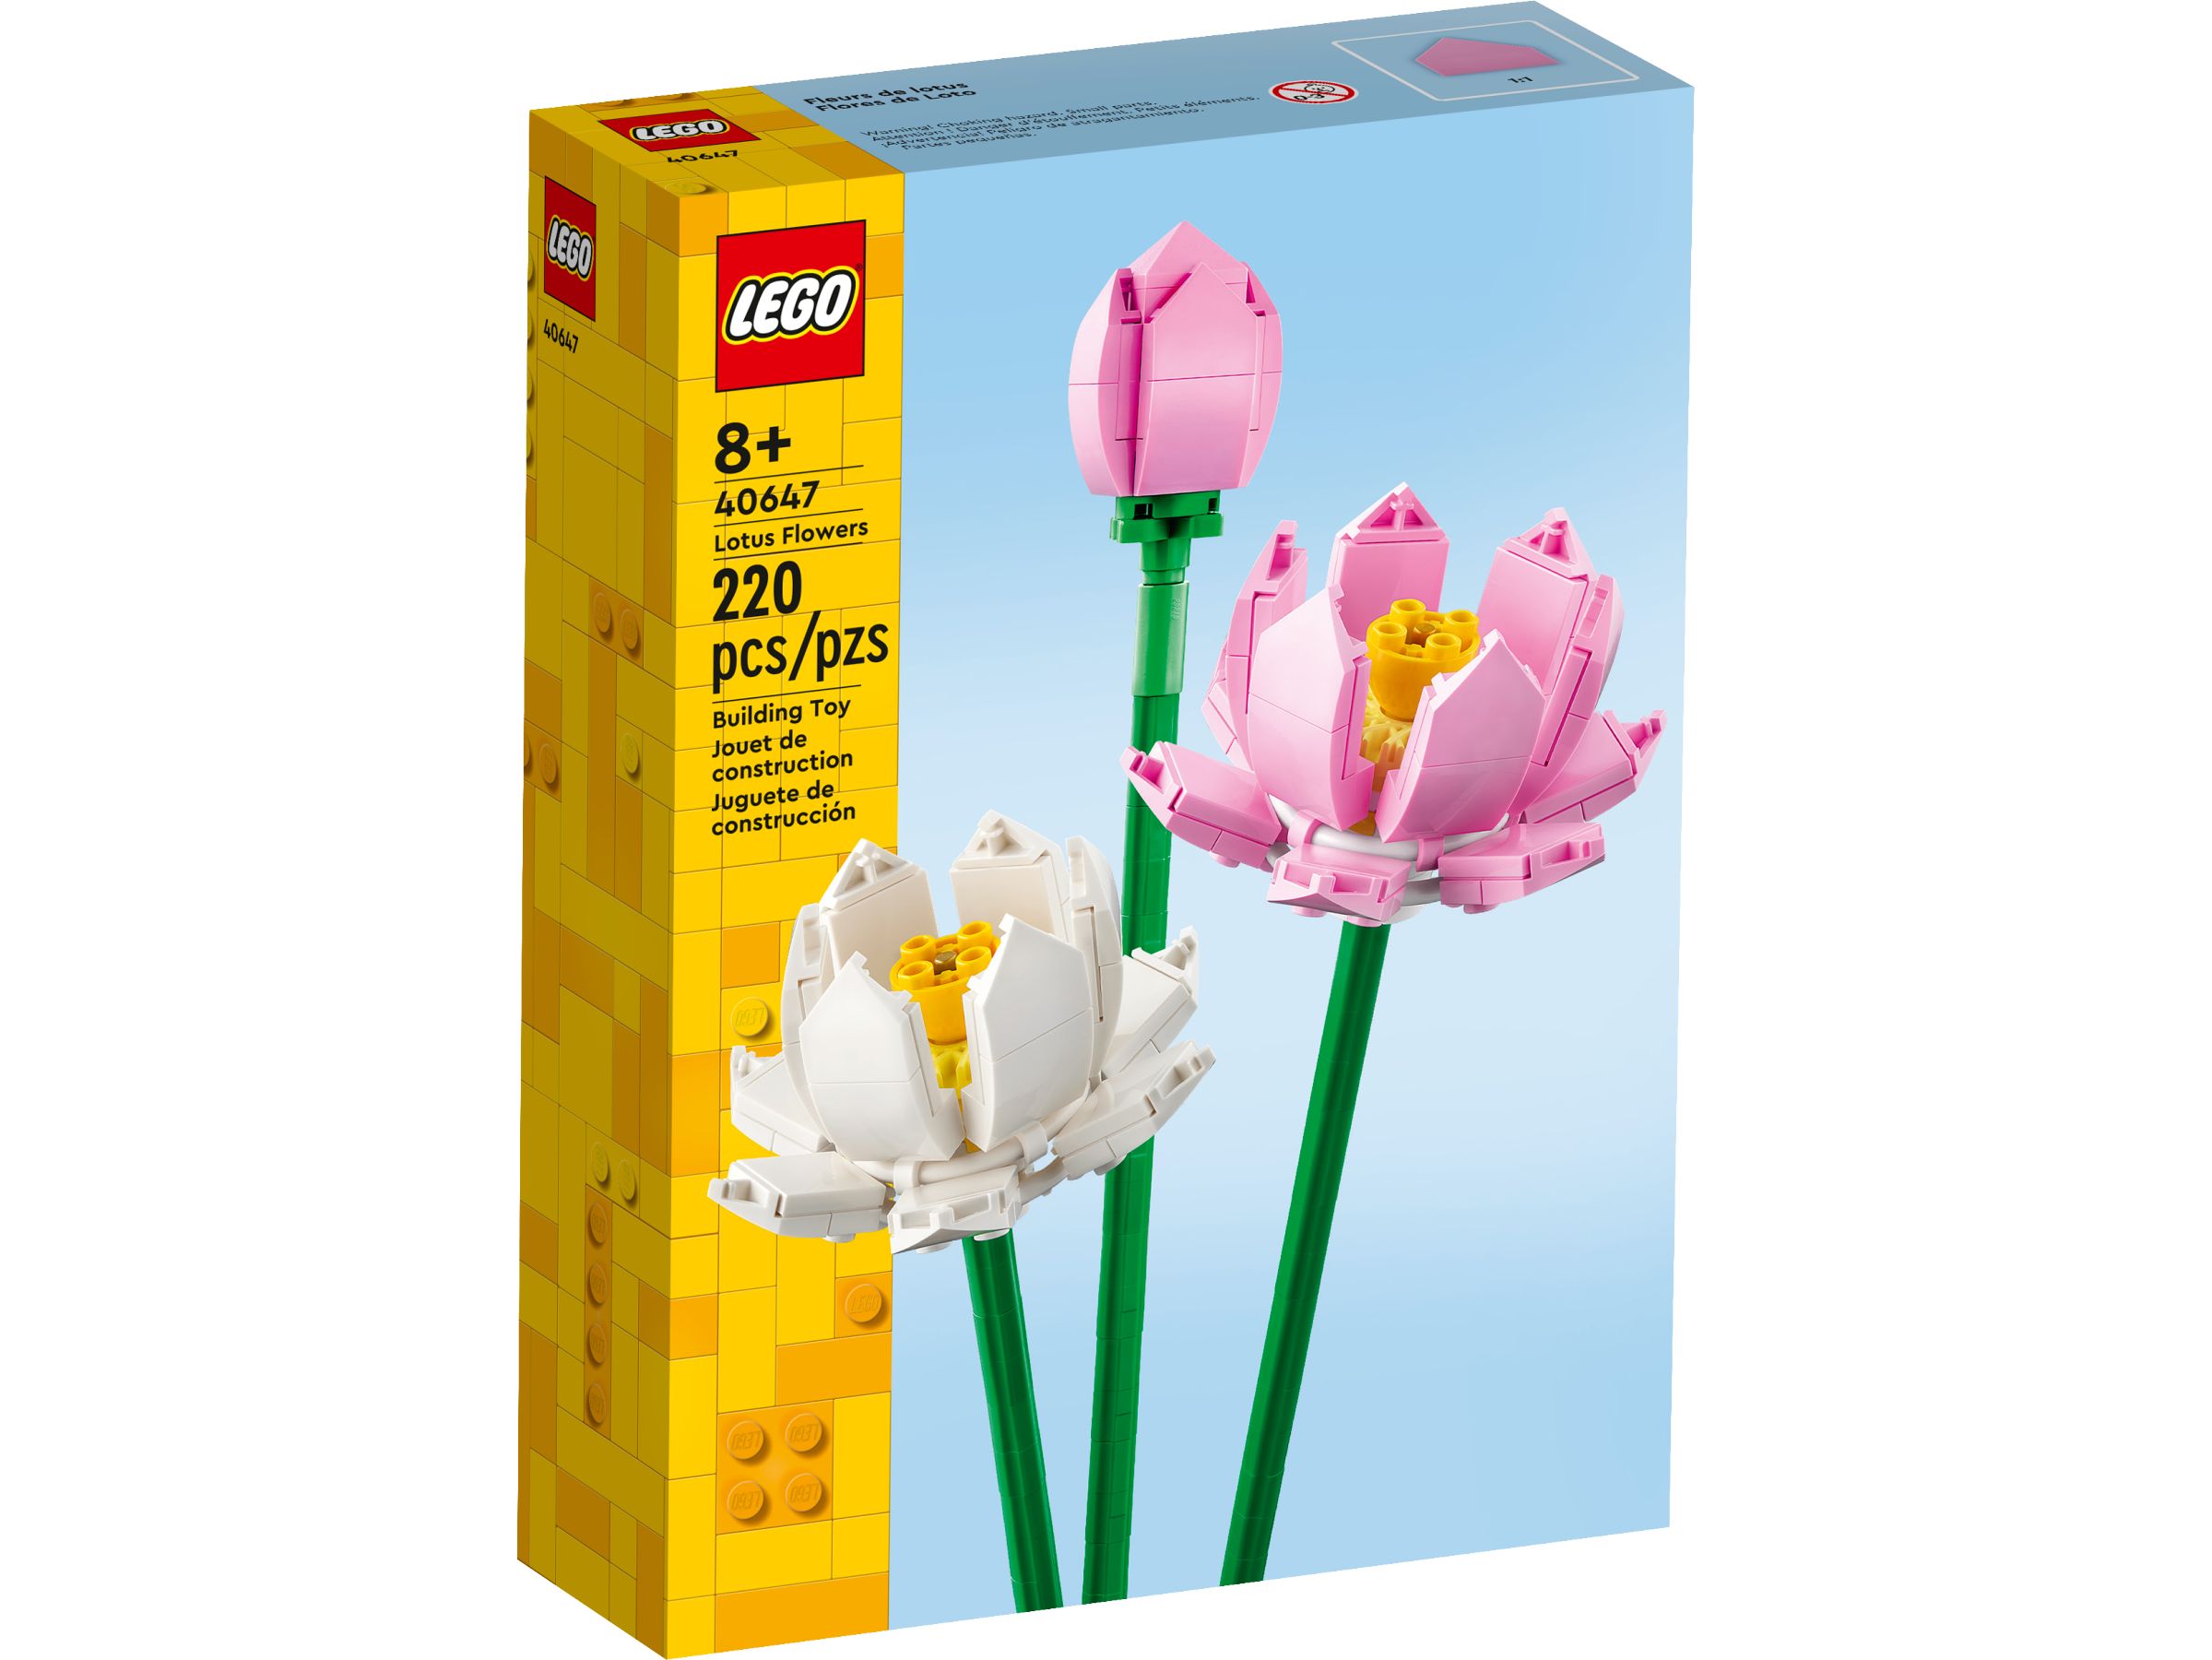 LEGO Miscellaneous 40647 Lotusblumen LEGO_40647_alt1.jpg